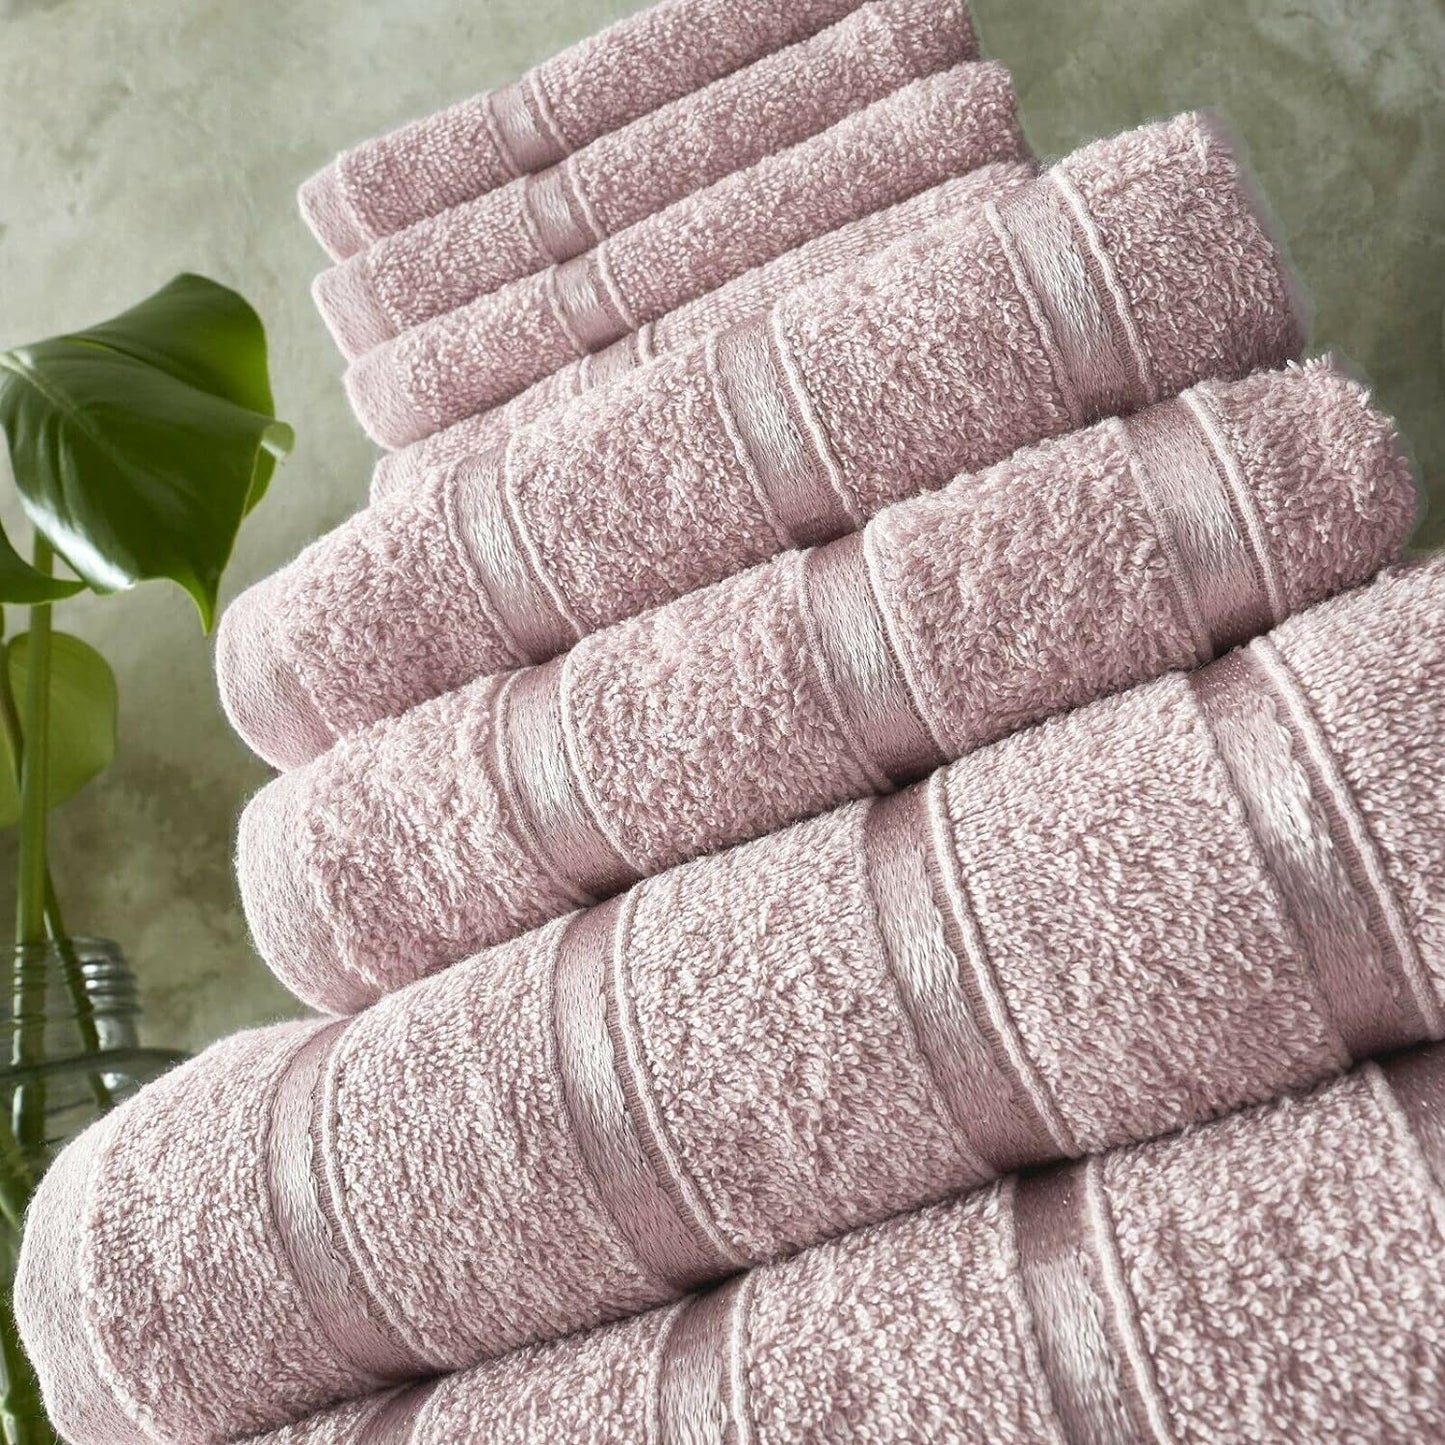 Egyptian Cotton Bath Towels Super Absorbent Quick Dry Extra Soft Hand & Face Towels 8 pcs Bale Set